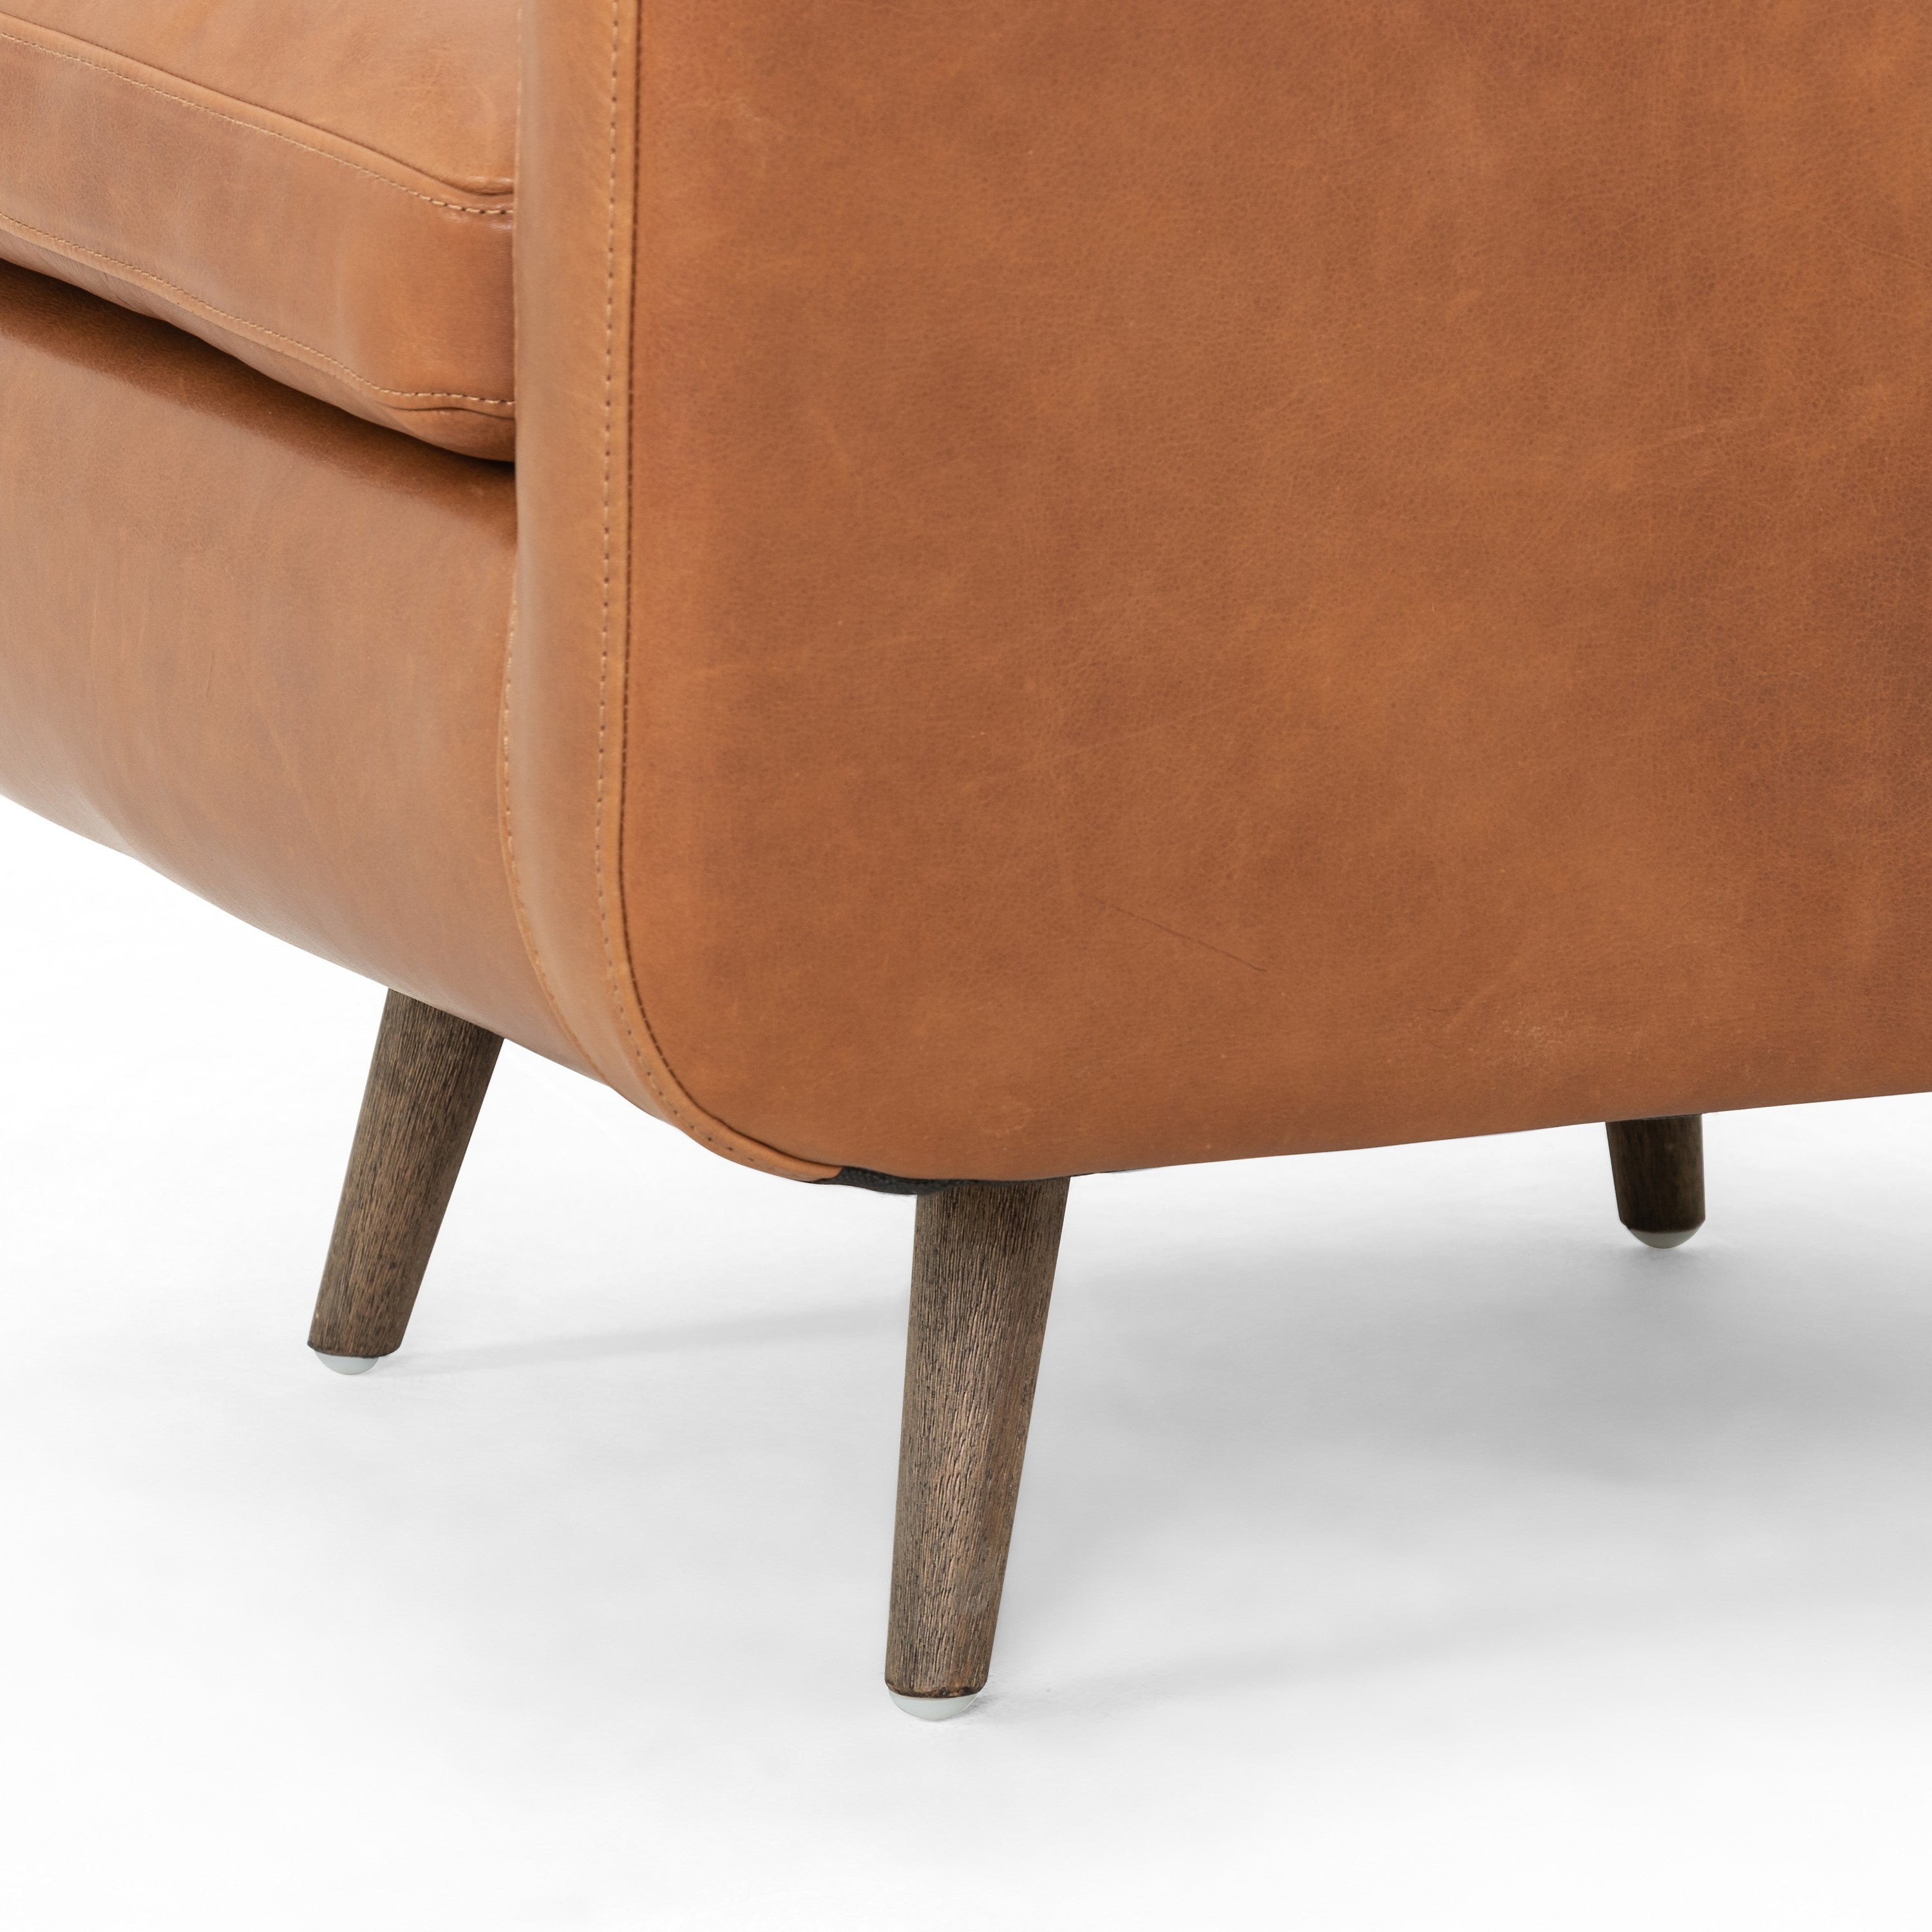 Kai Leather Swivel Chair